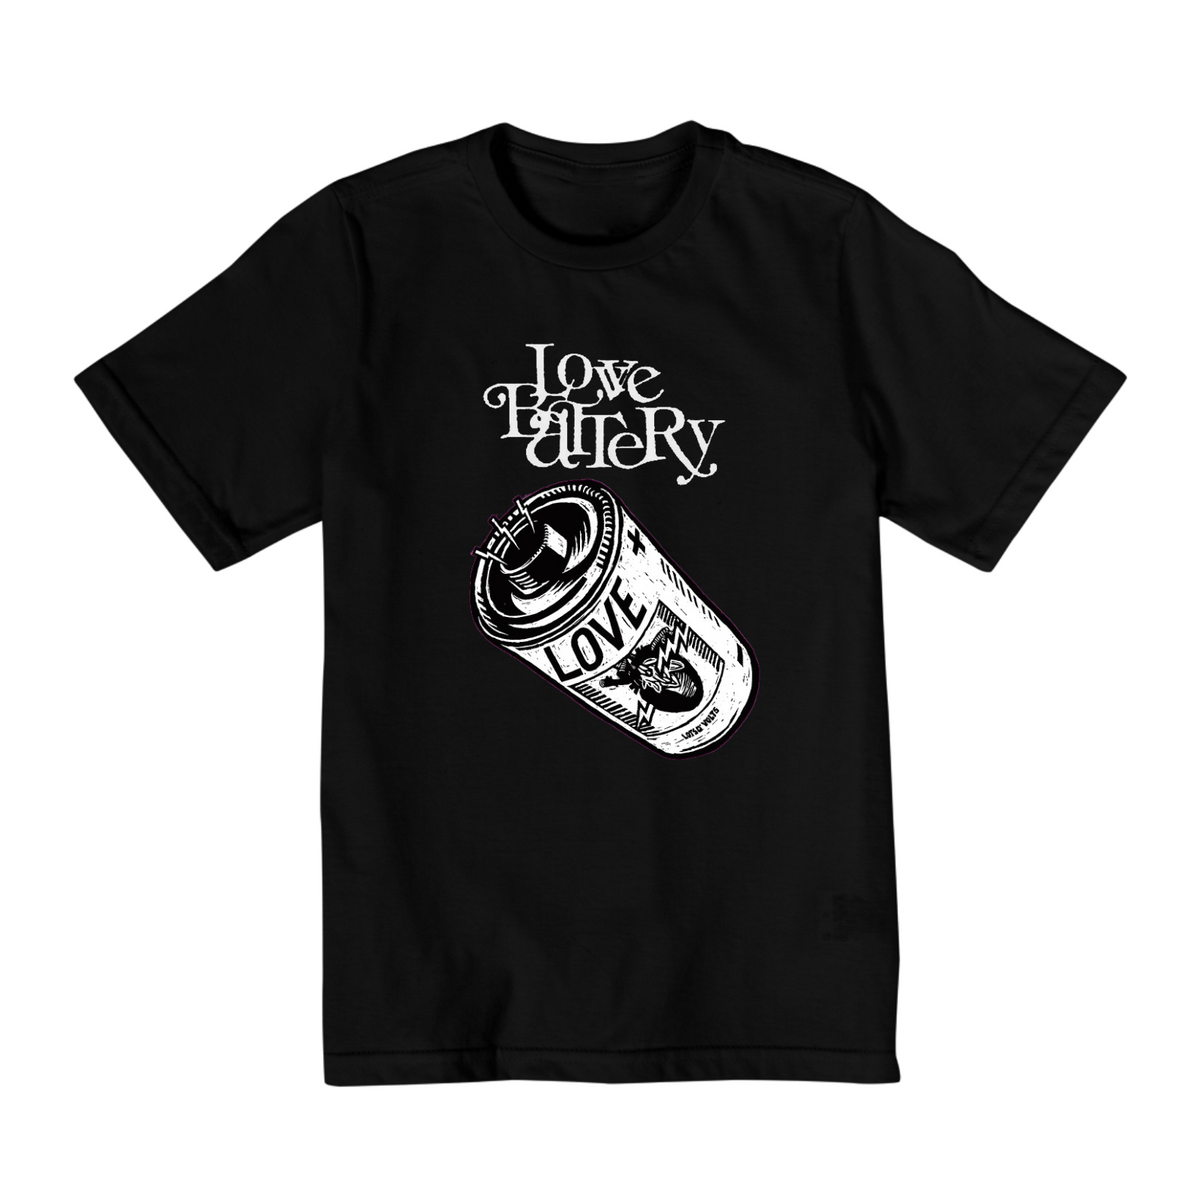 Nome do produto: Camiseta Infantil 02 a 08 anos - Bandas - Love Battery